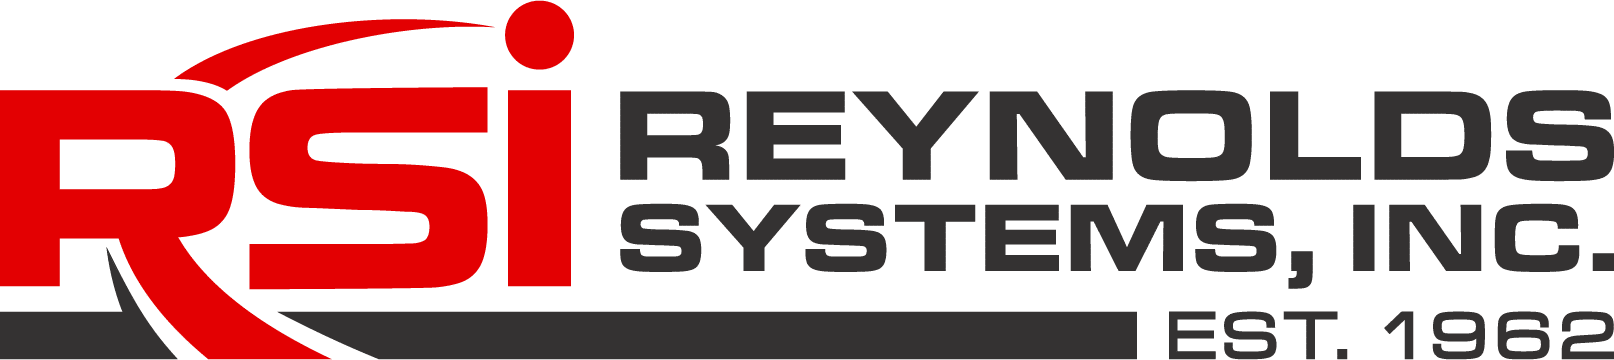 RSI Reynolds Systems